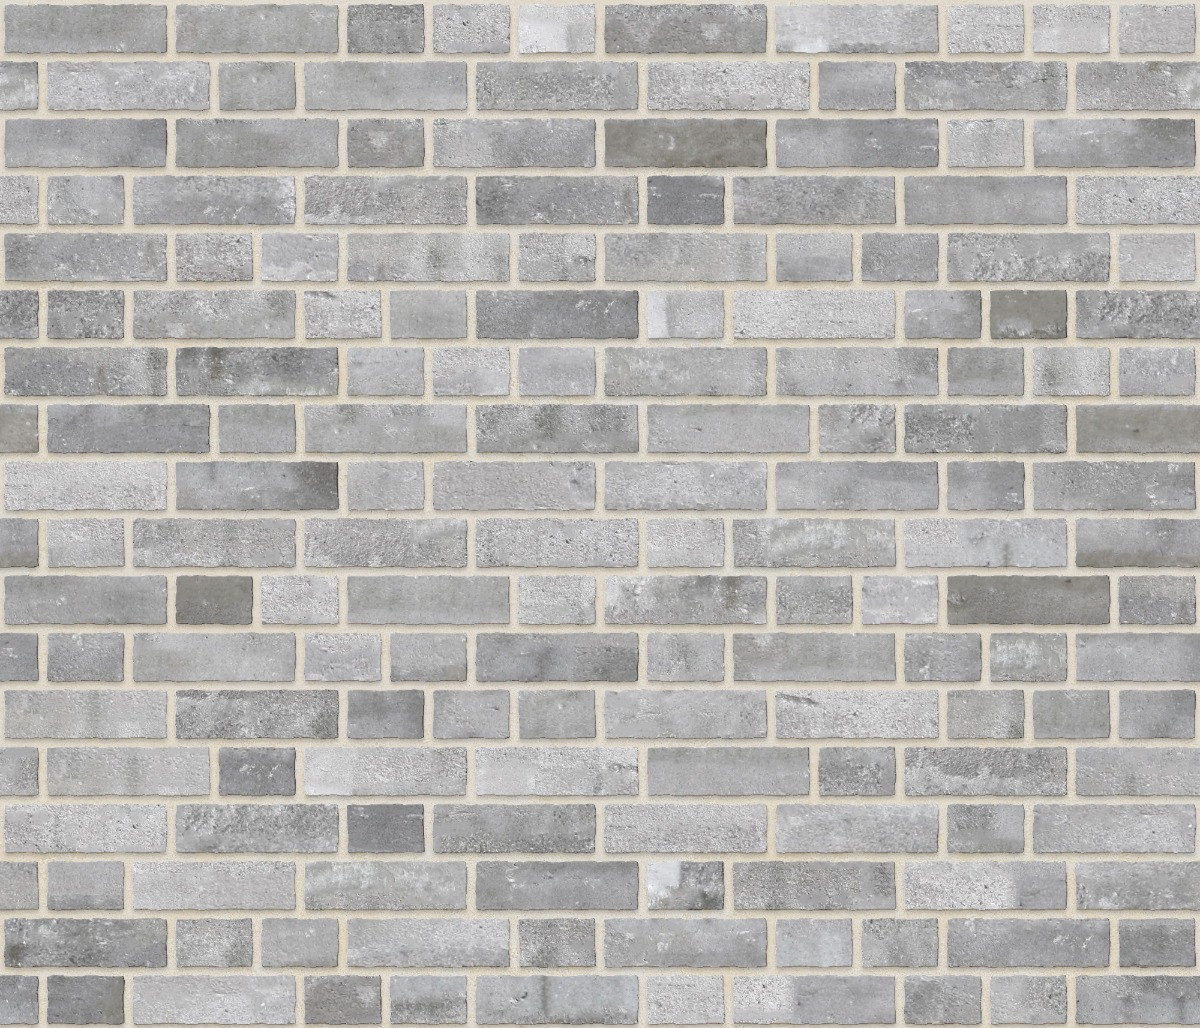 A seamless brick texture with finnish grey brick units arranged in a Random Bond pattern